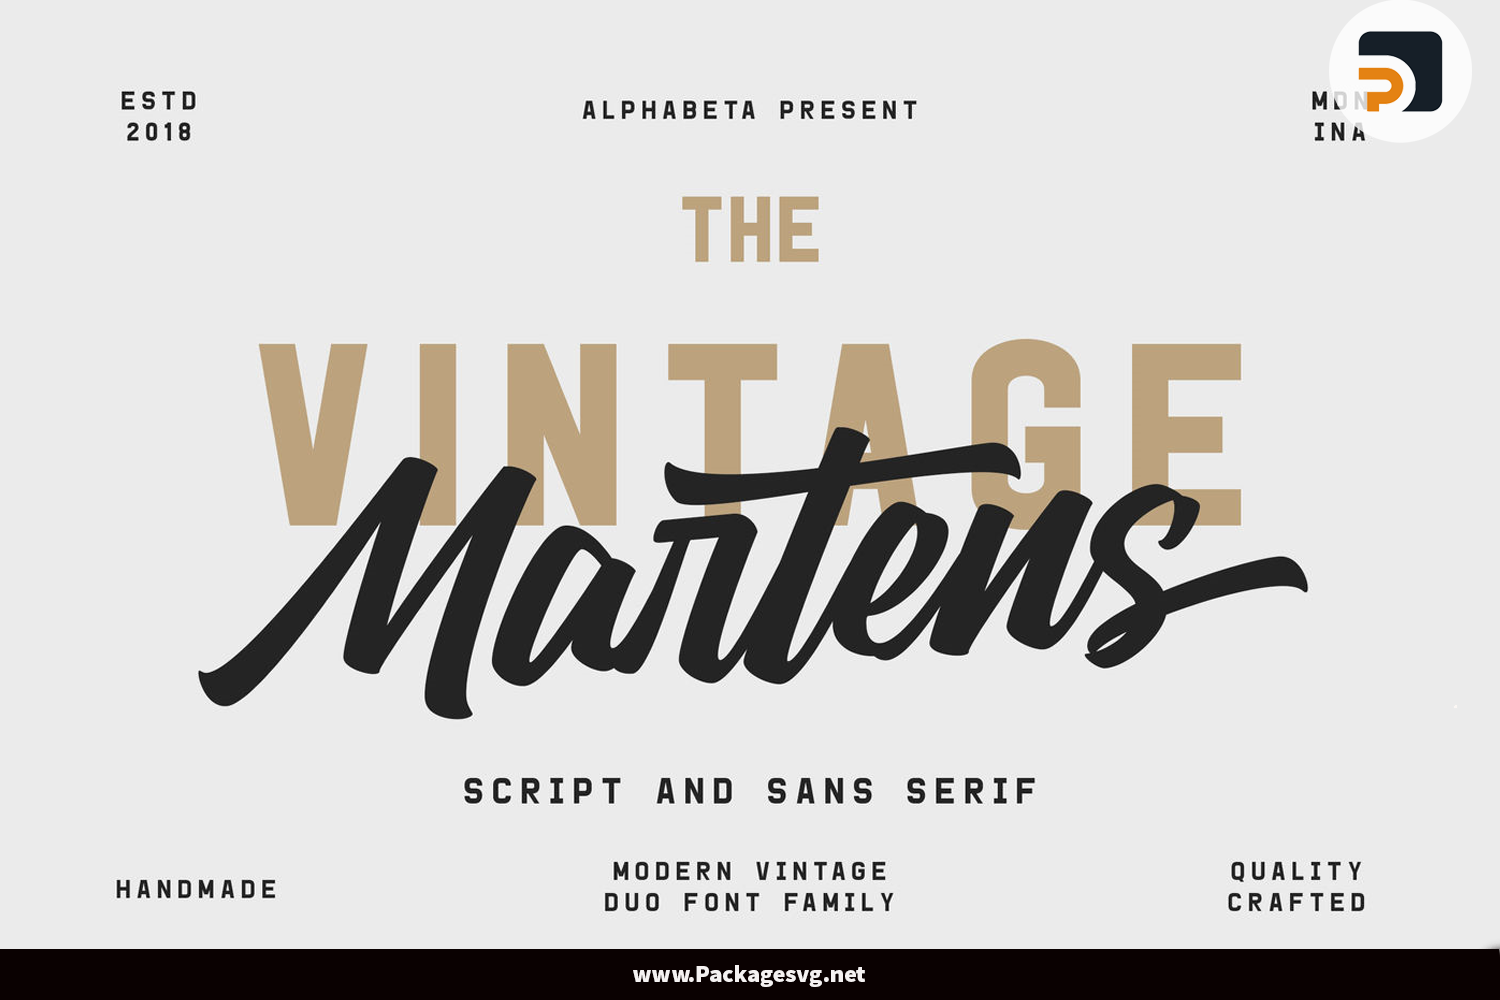 The Vintage Martens Script Font